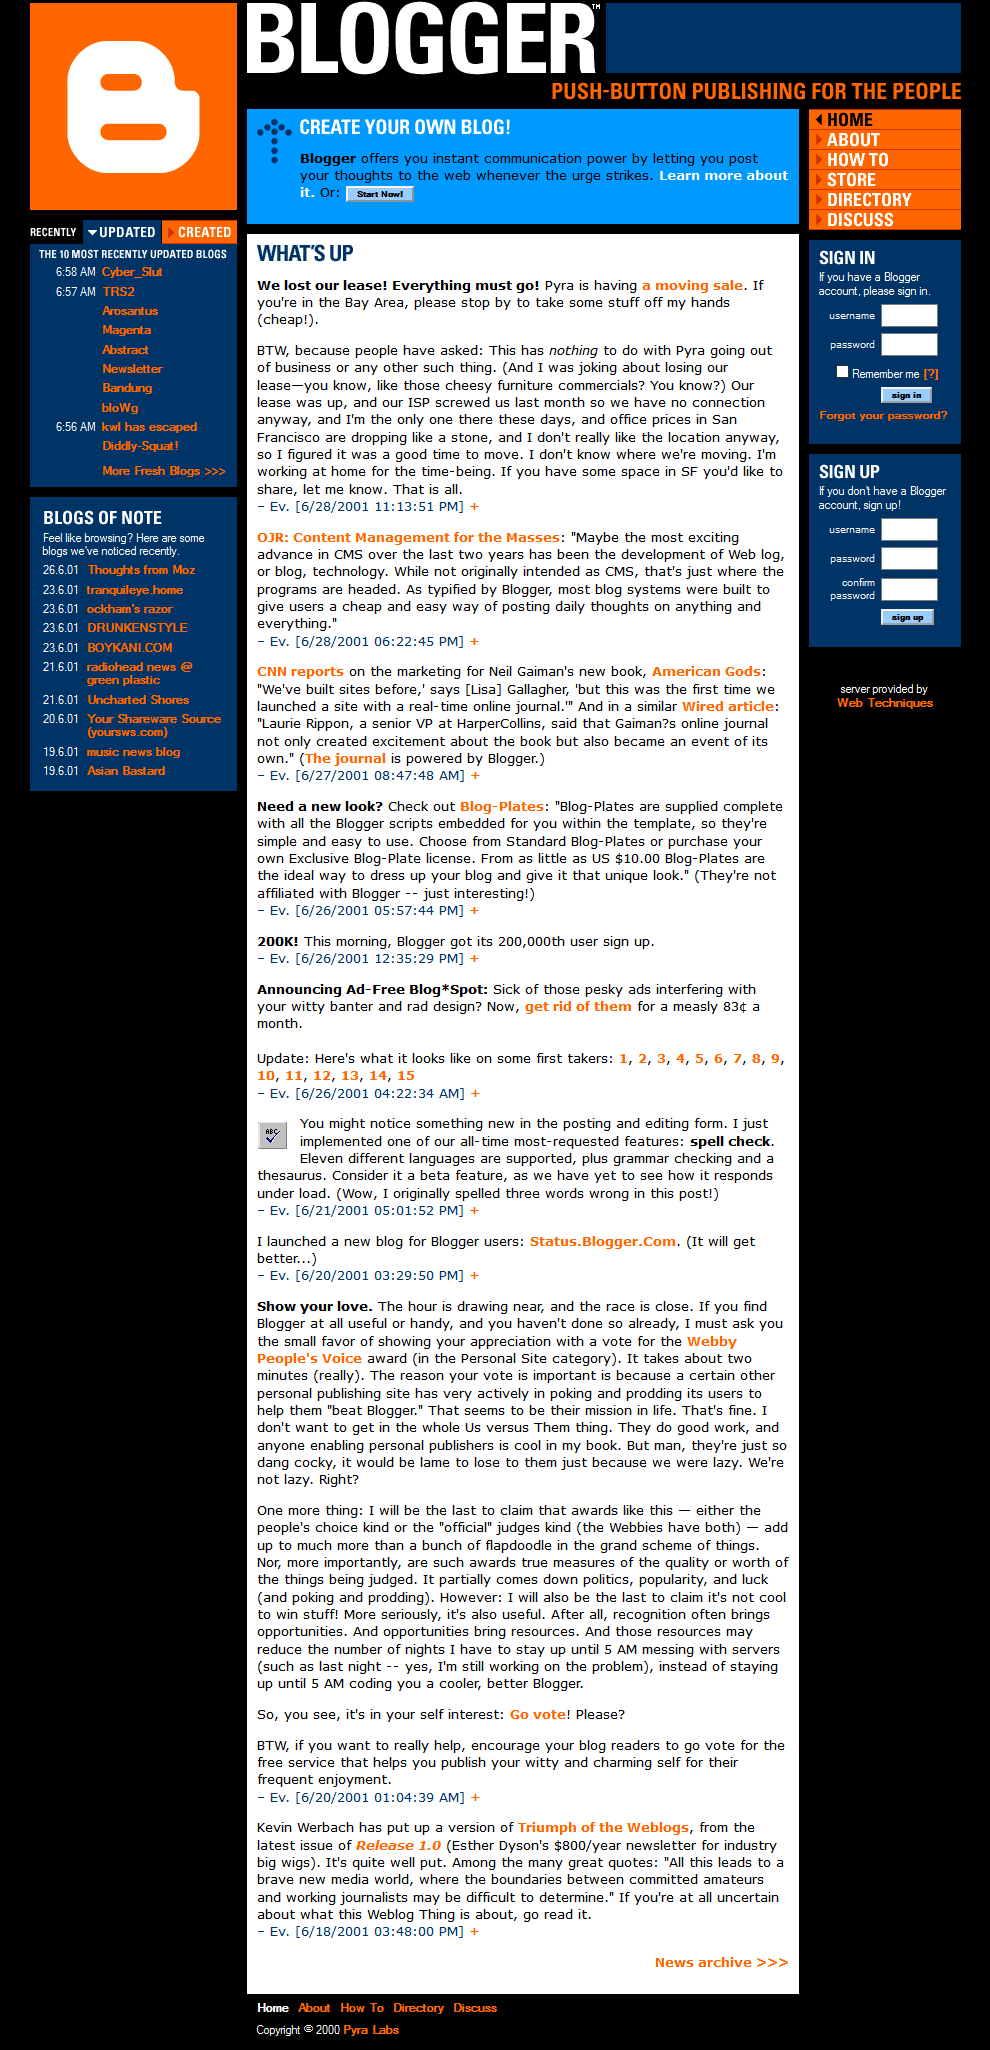 Blogger website in 2001